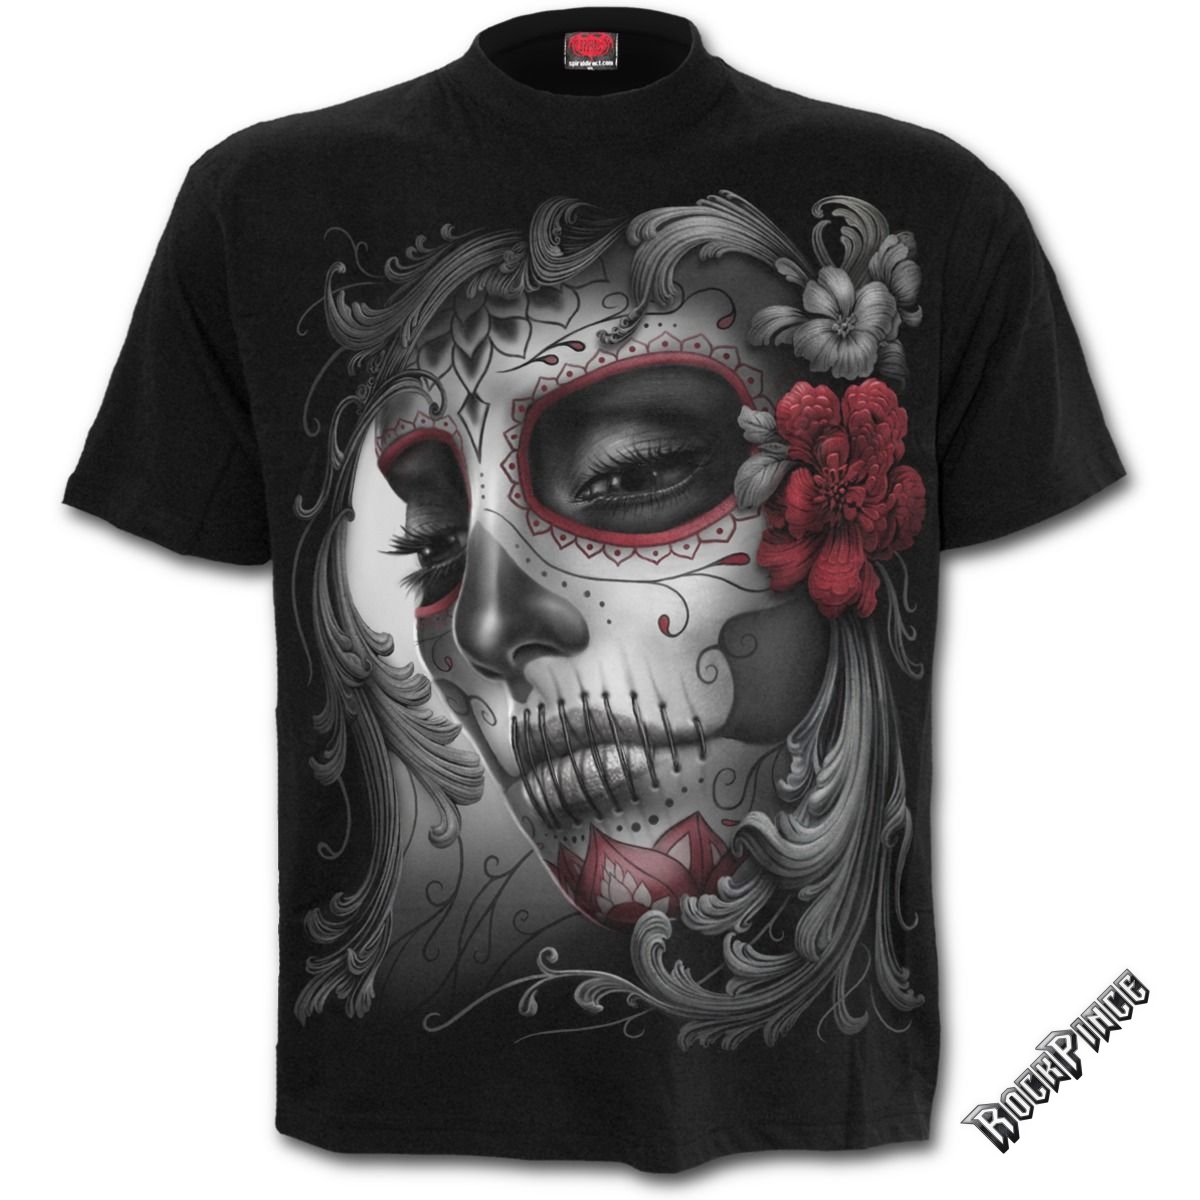 SKULL ROSES - Front Print T-Shirt Black - D058M121